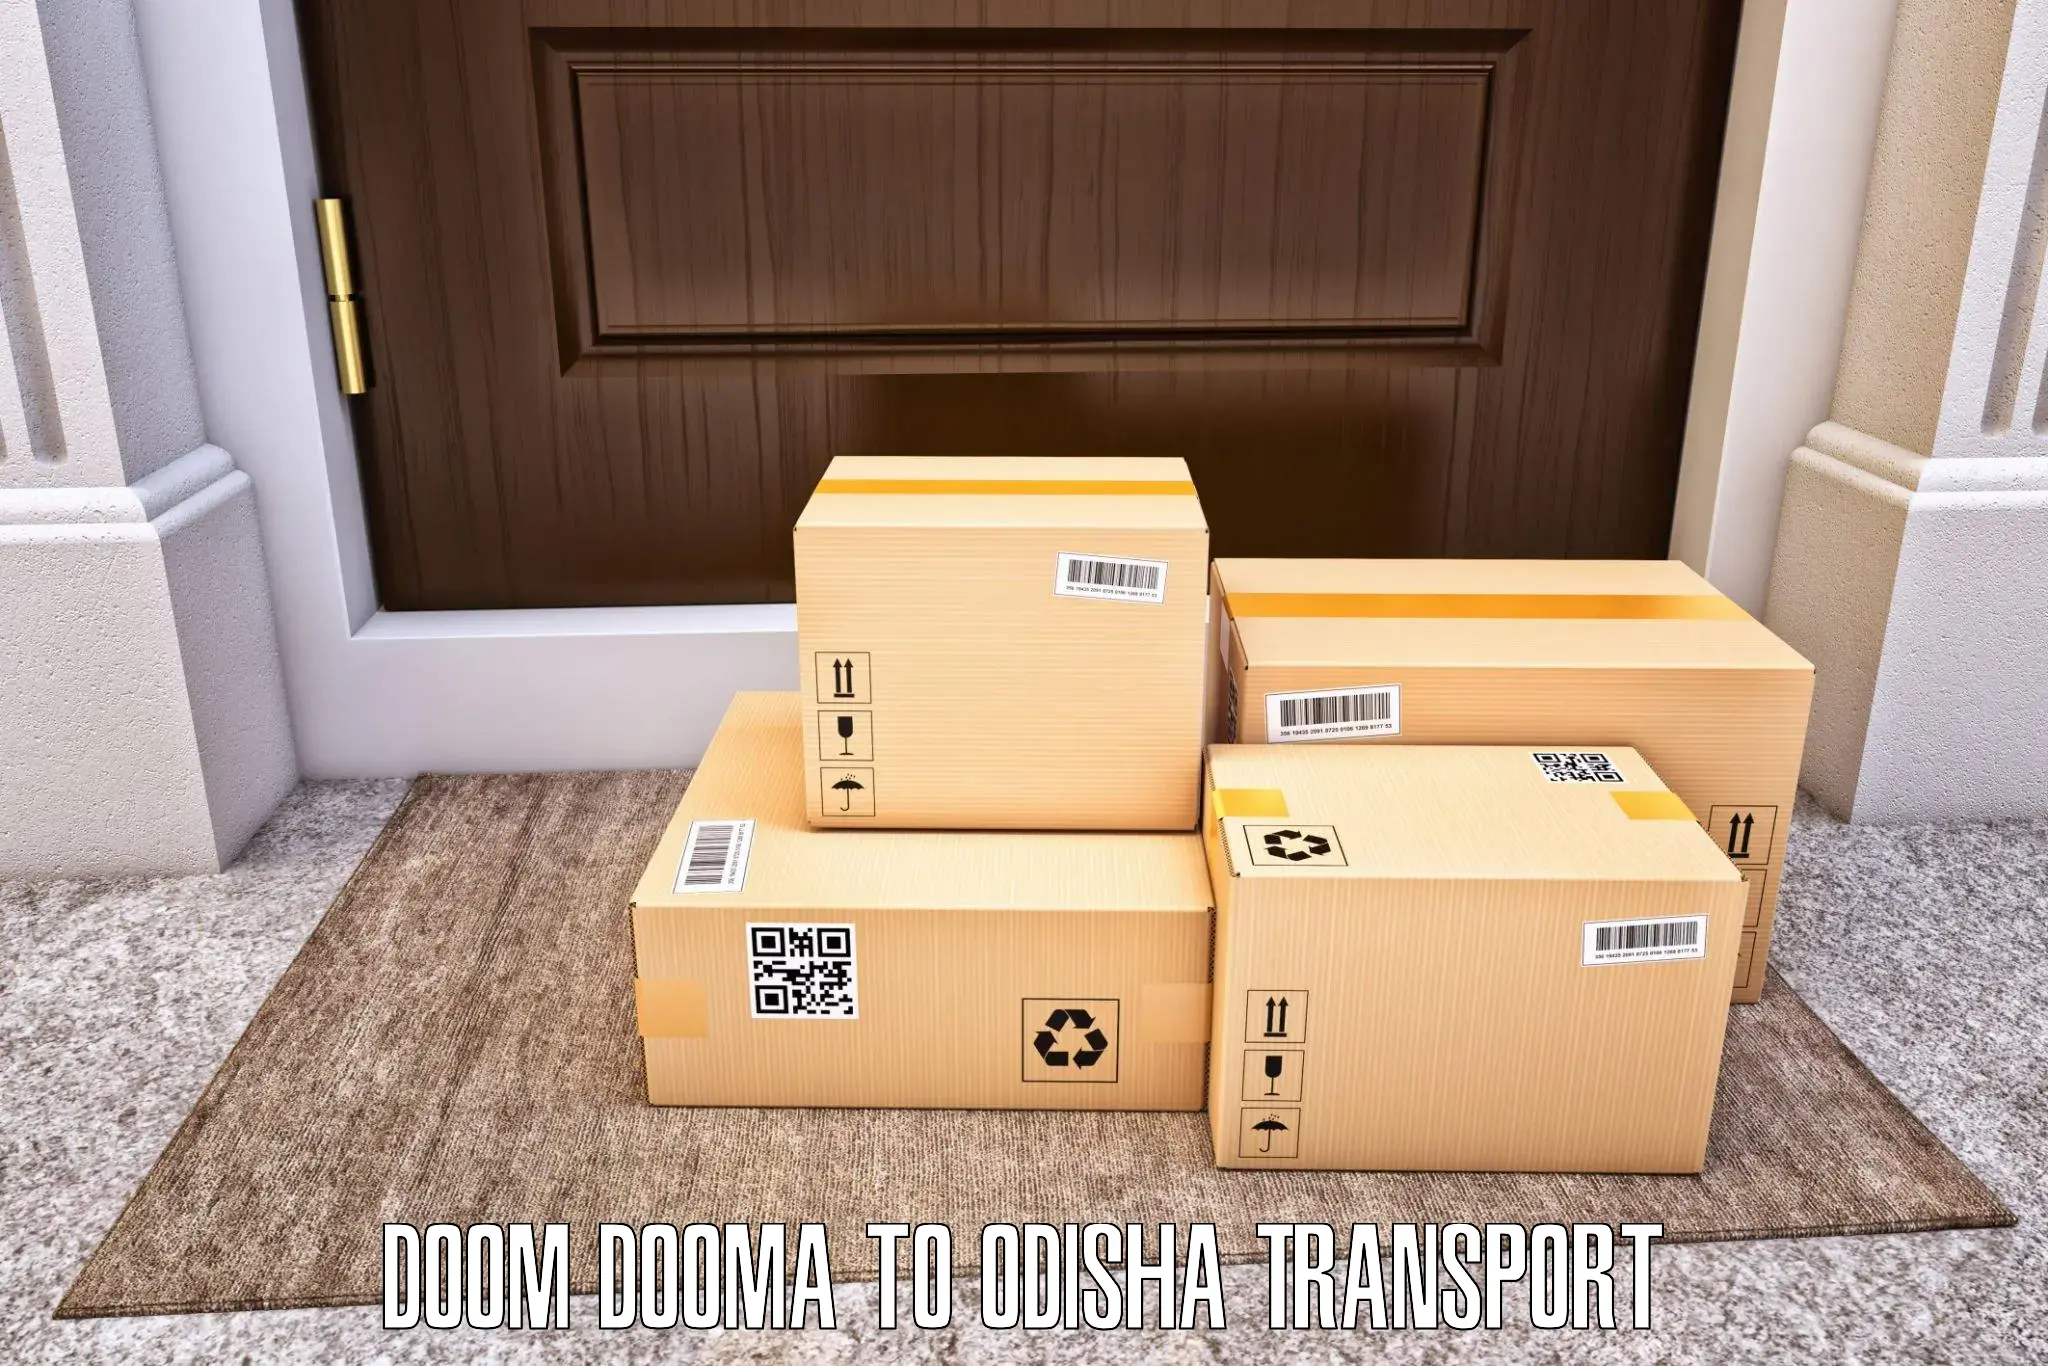 Commercial transport service Doom Dooma to Swampatna